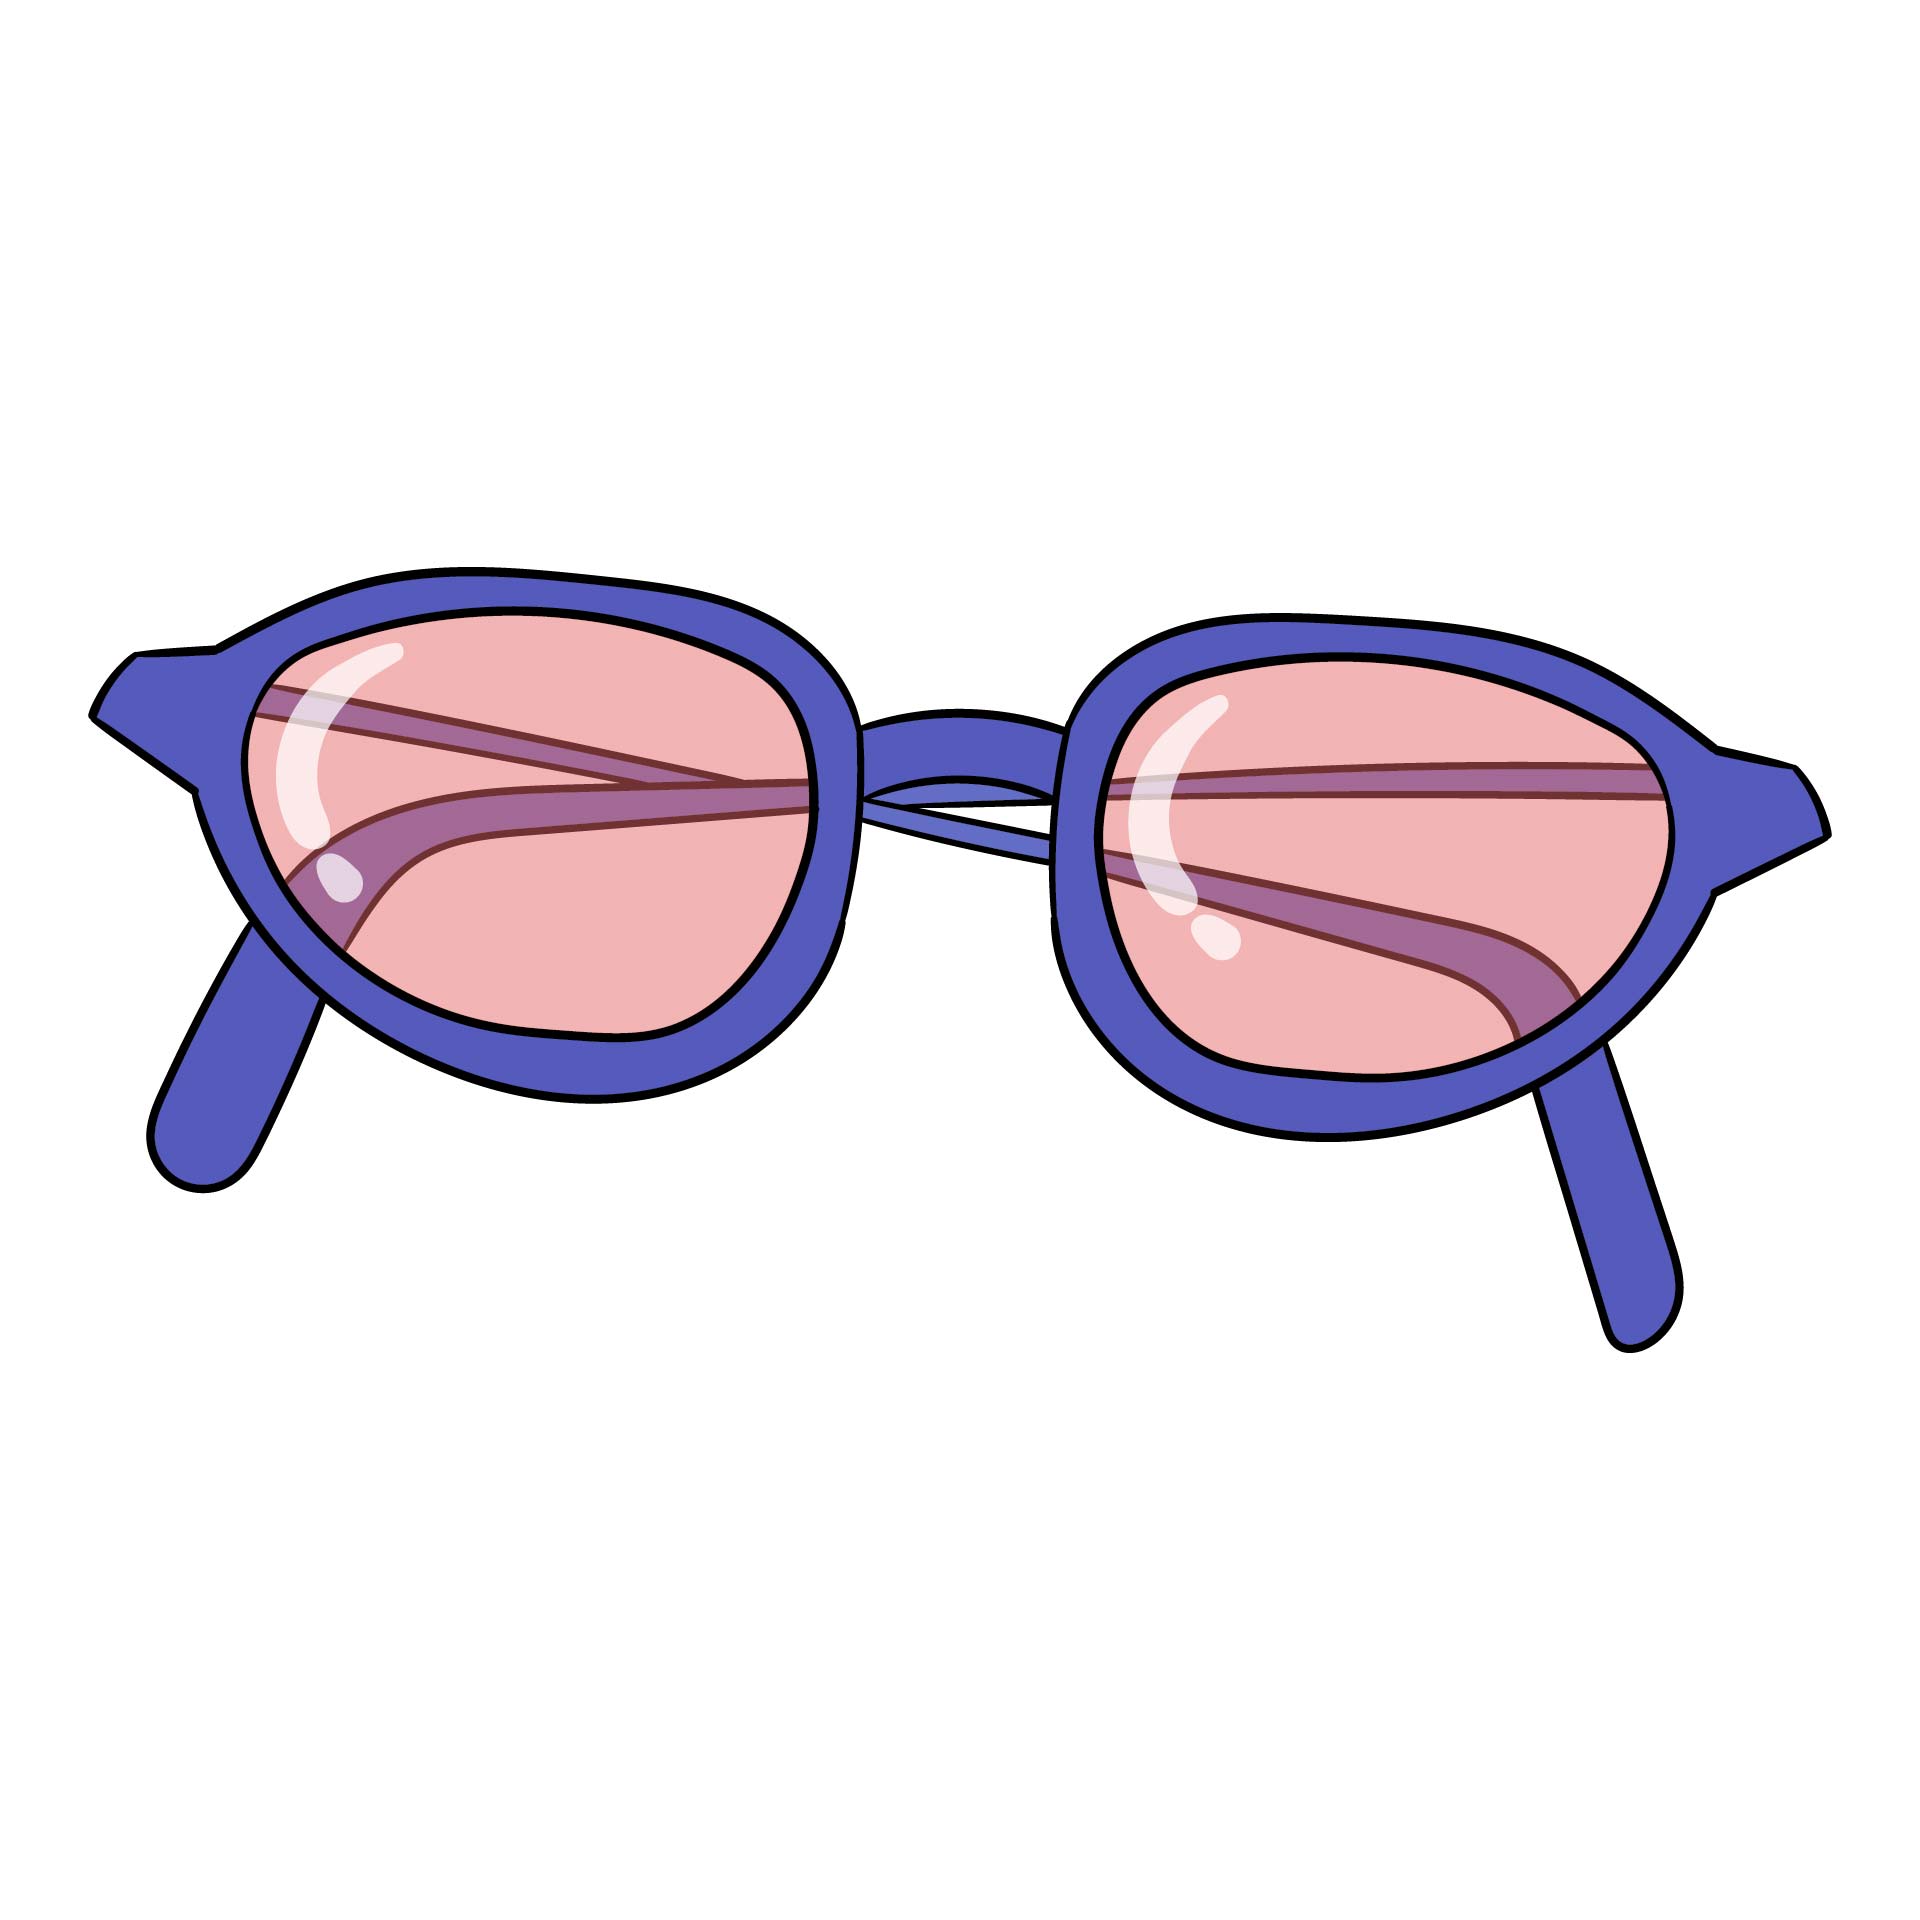 printable-sunglasses-template-free-printable-templates-free